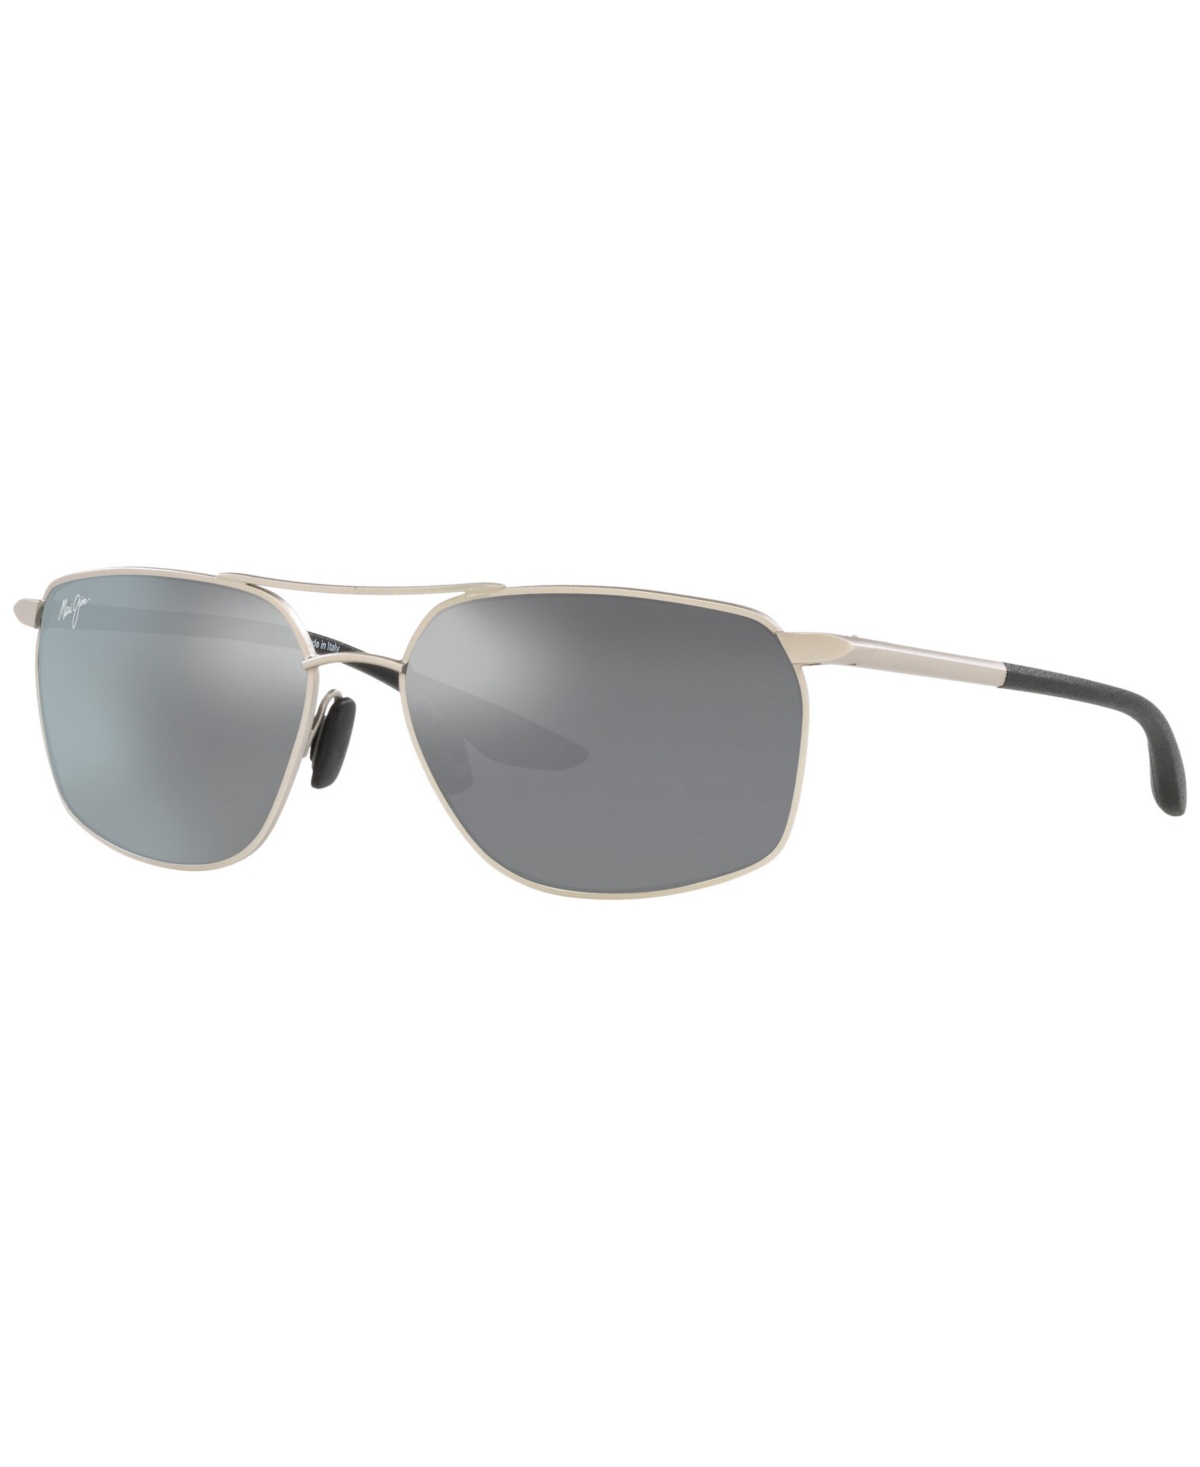 Men's Polarized Sunglasses, Puu Kukui 58 - Brown